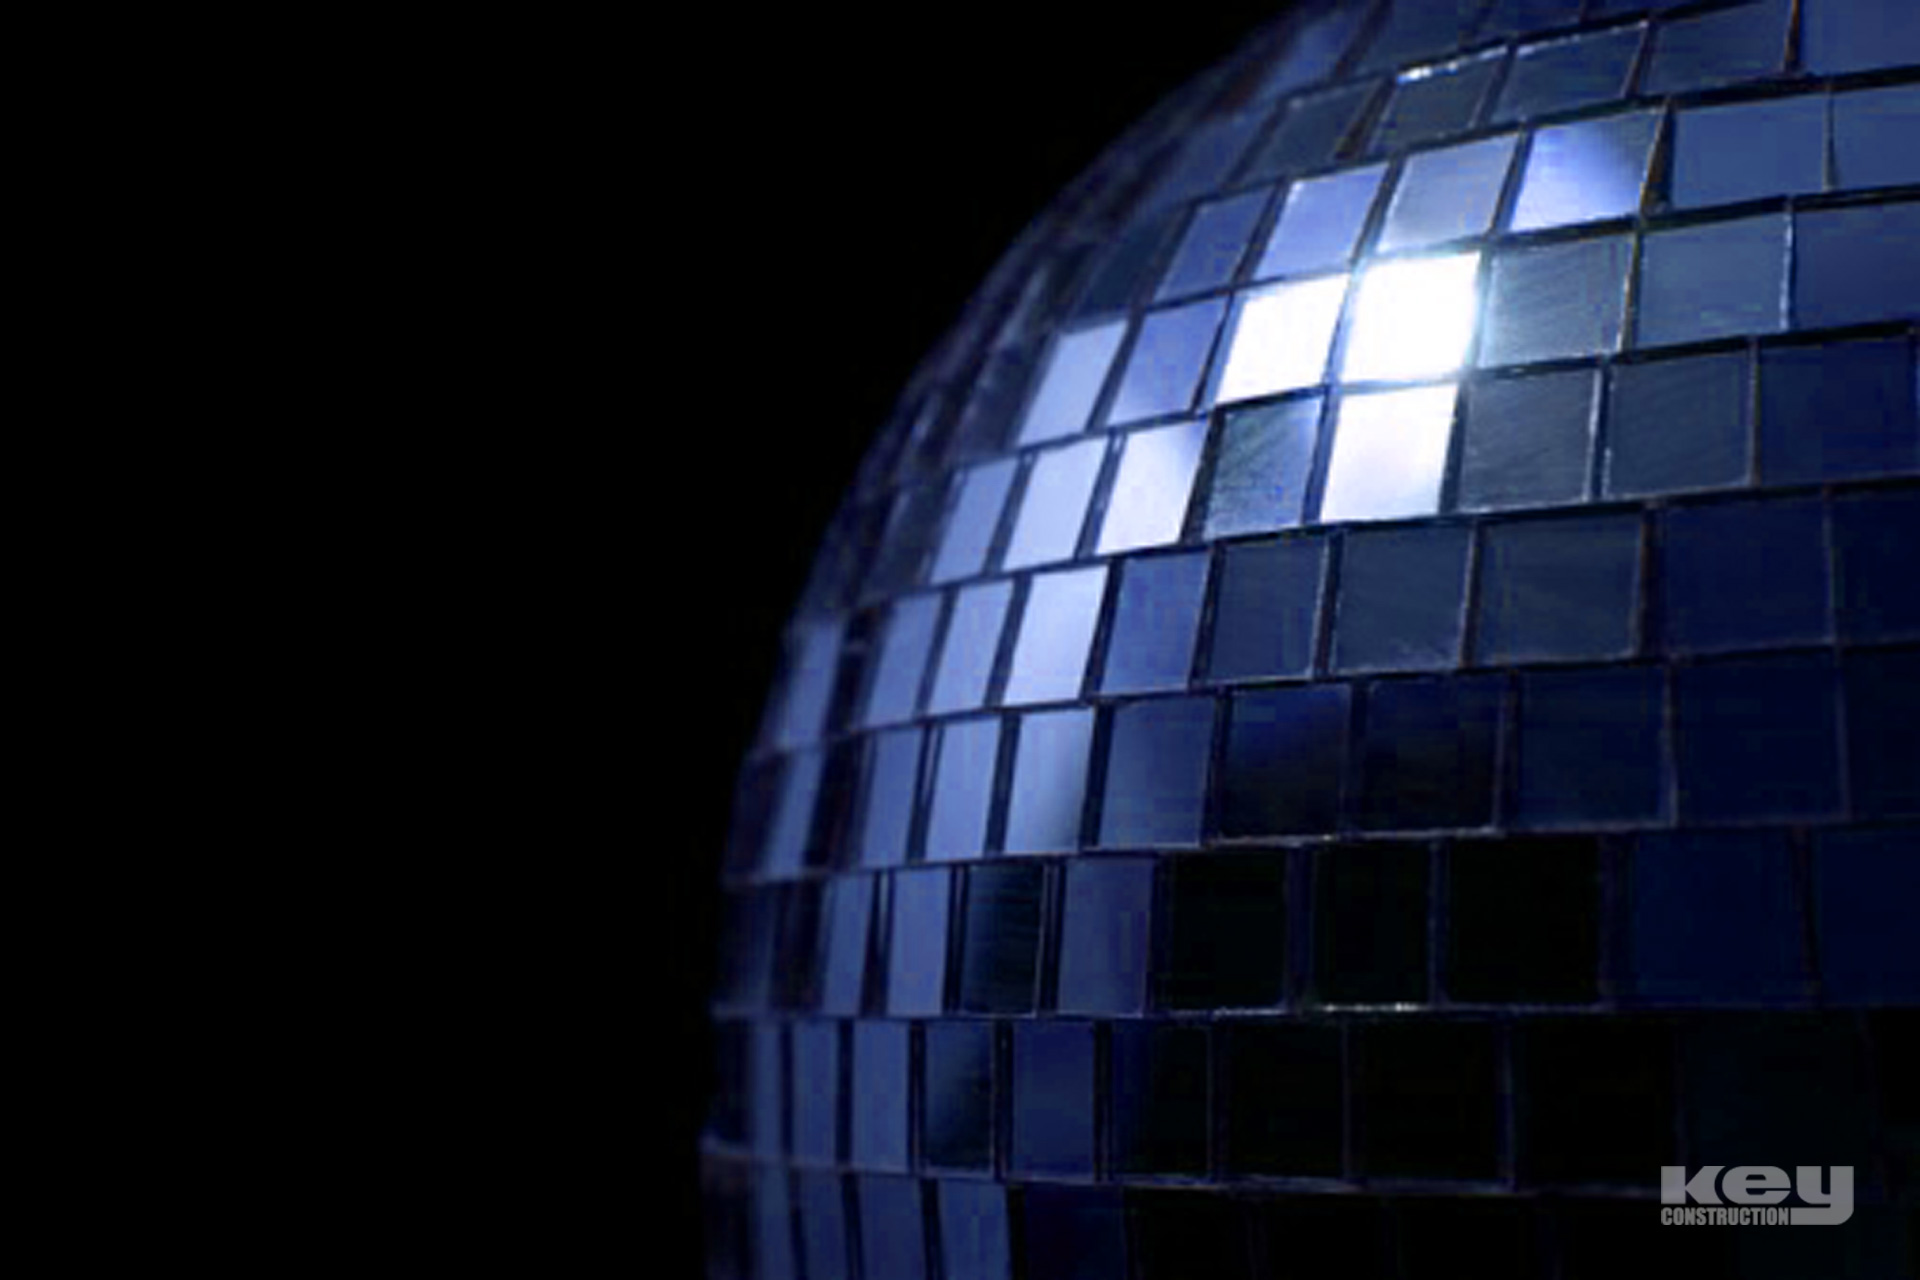 shiny disco ball   1920x1280 wallpaper shiny disco ball   1920x1280